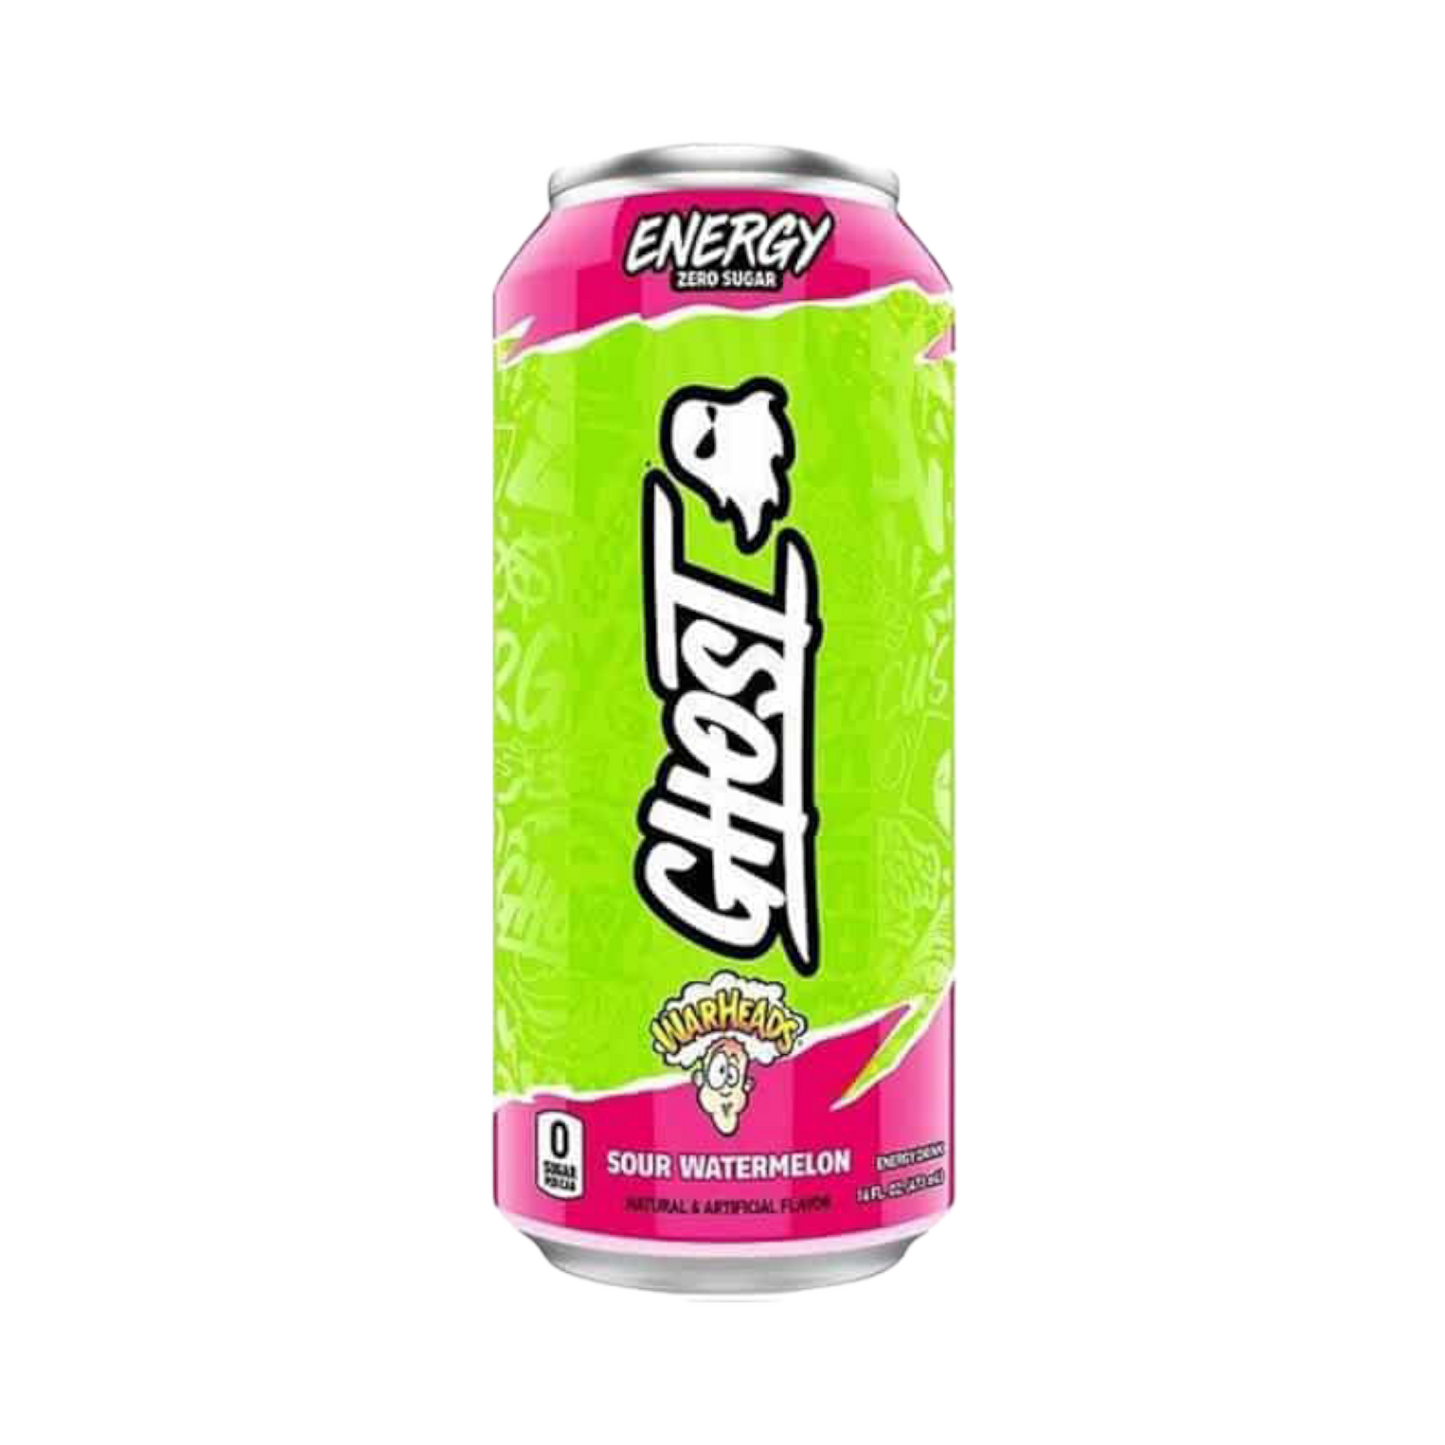 Ghost Zero Sugar Energy Drink Warheads Sour Watermelon - 16fl.oz (473ml)